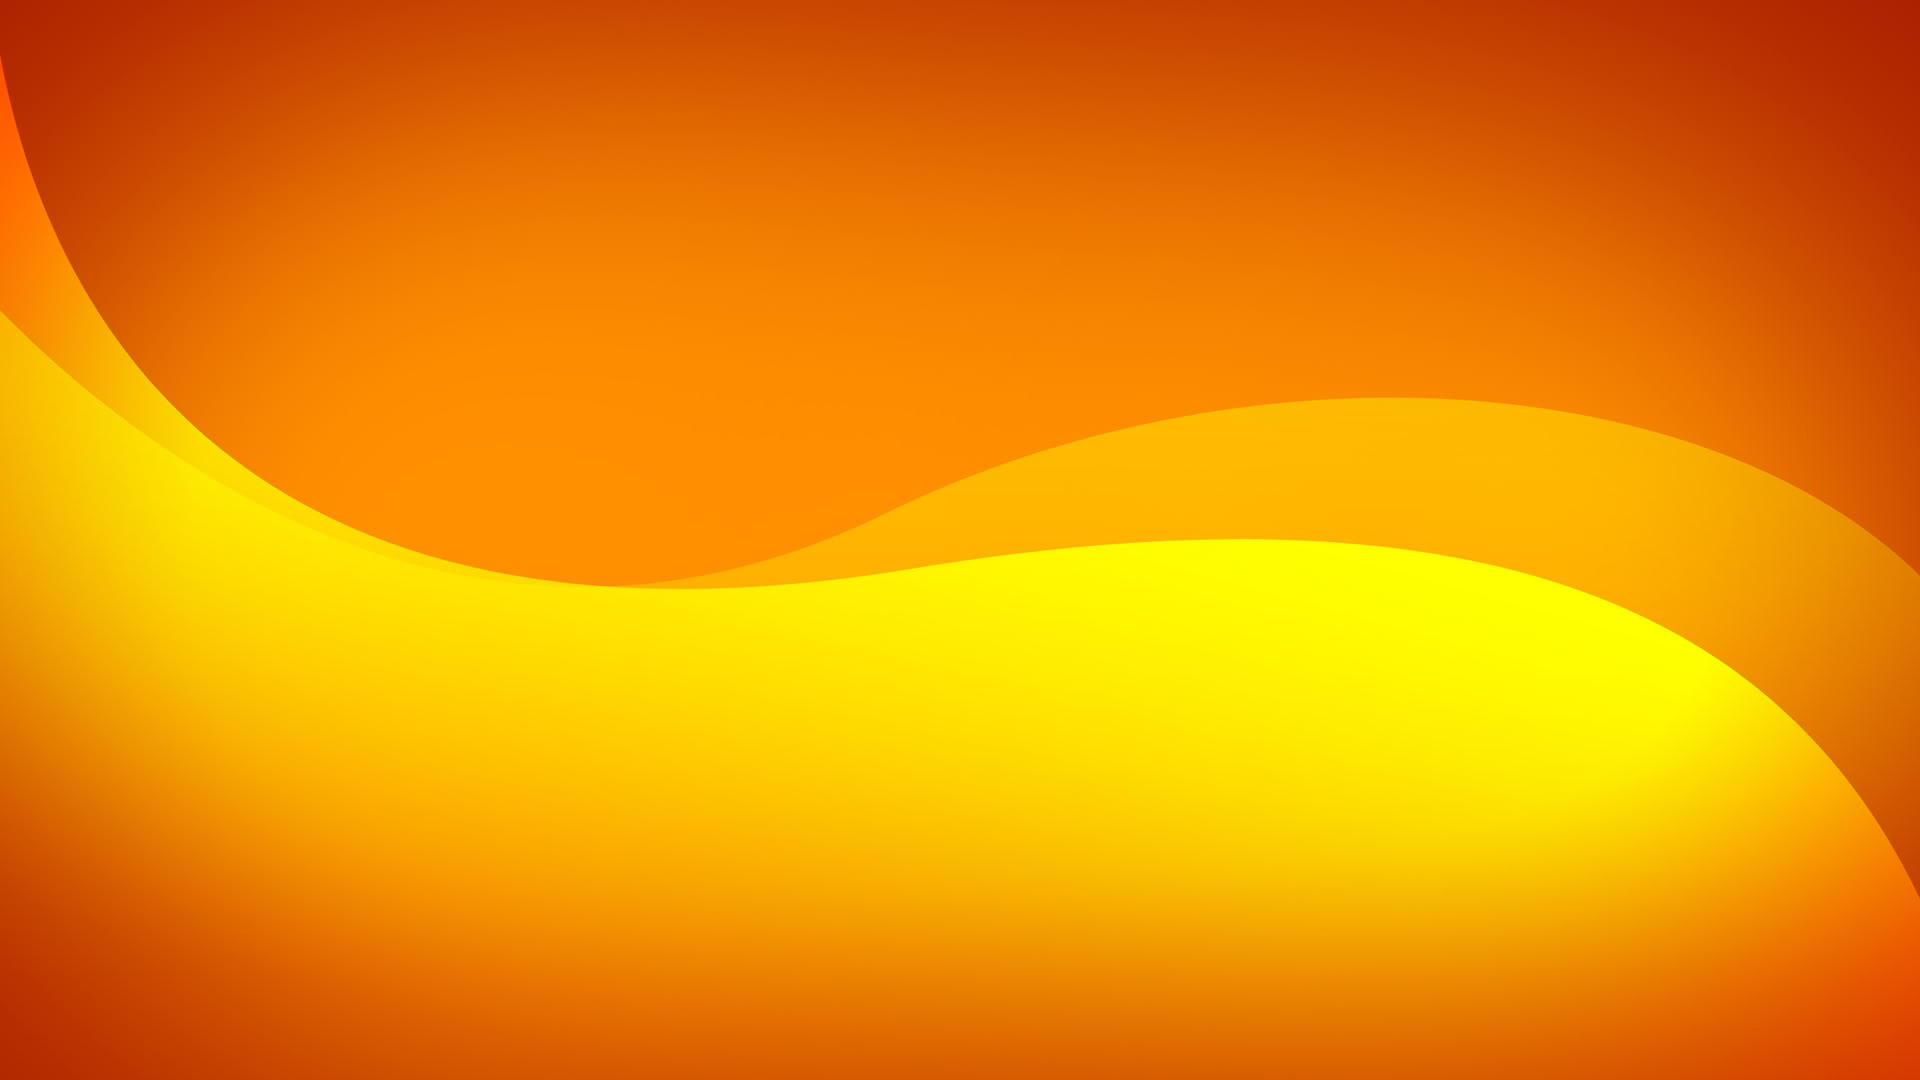 Cool Orange Background Designs